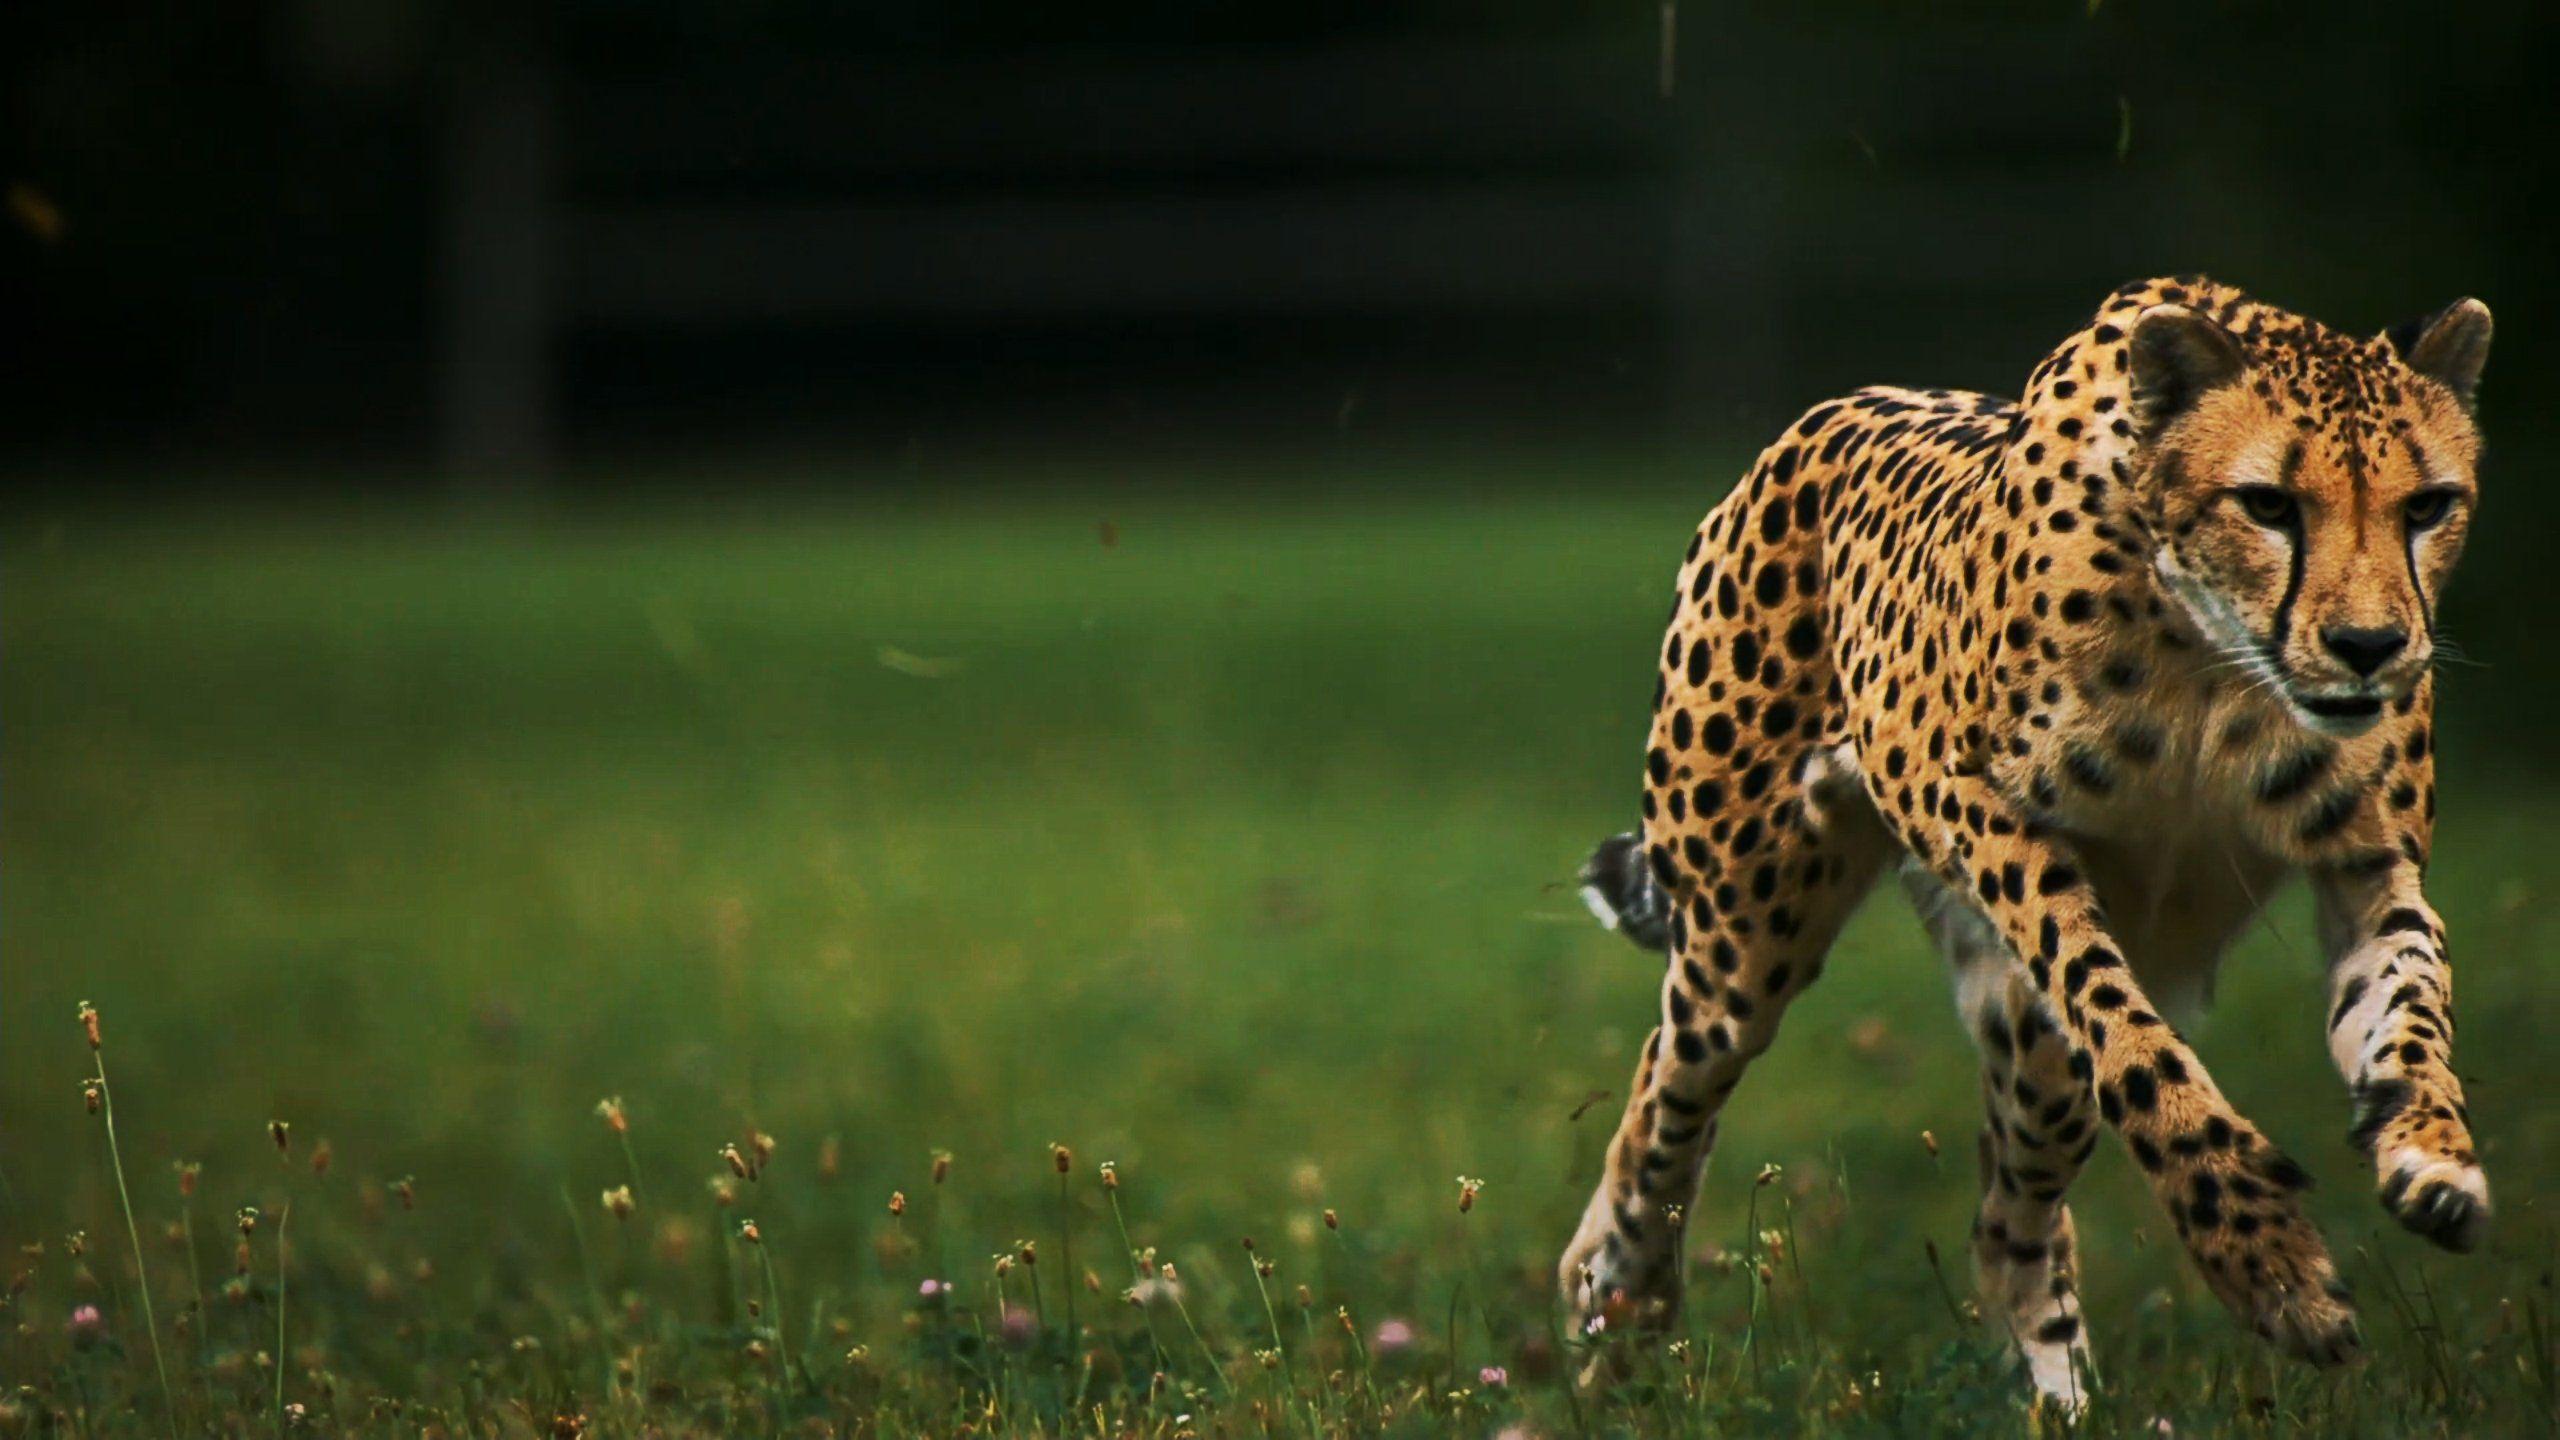 Cheetah Running HD